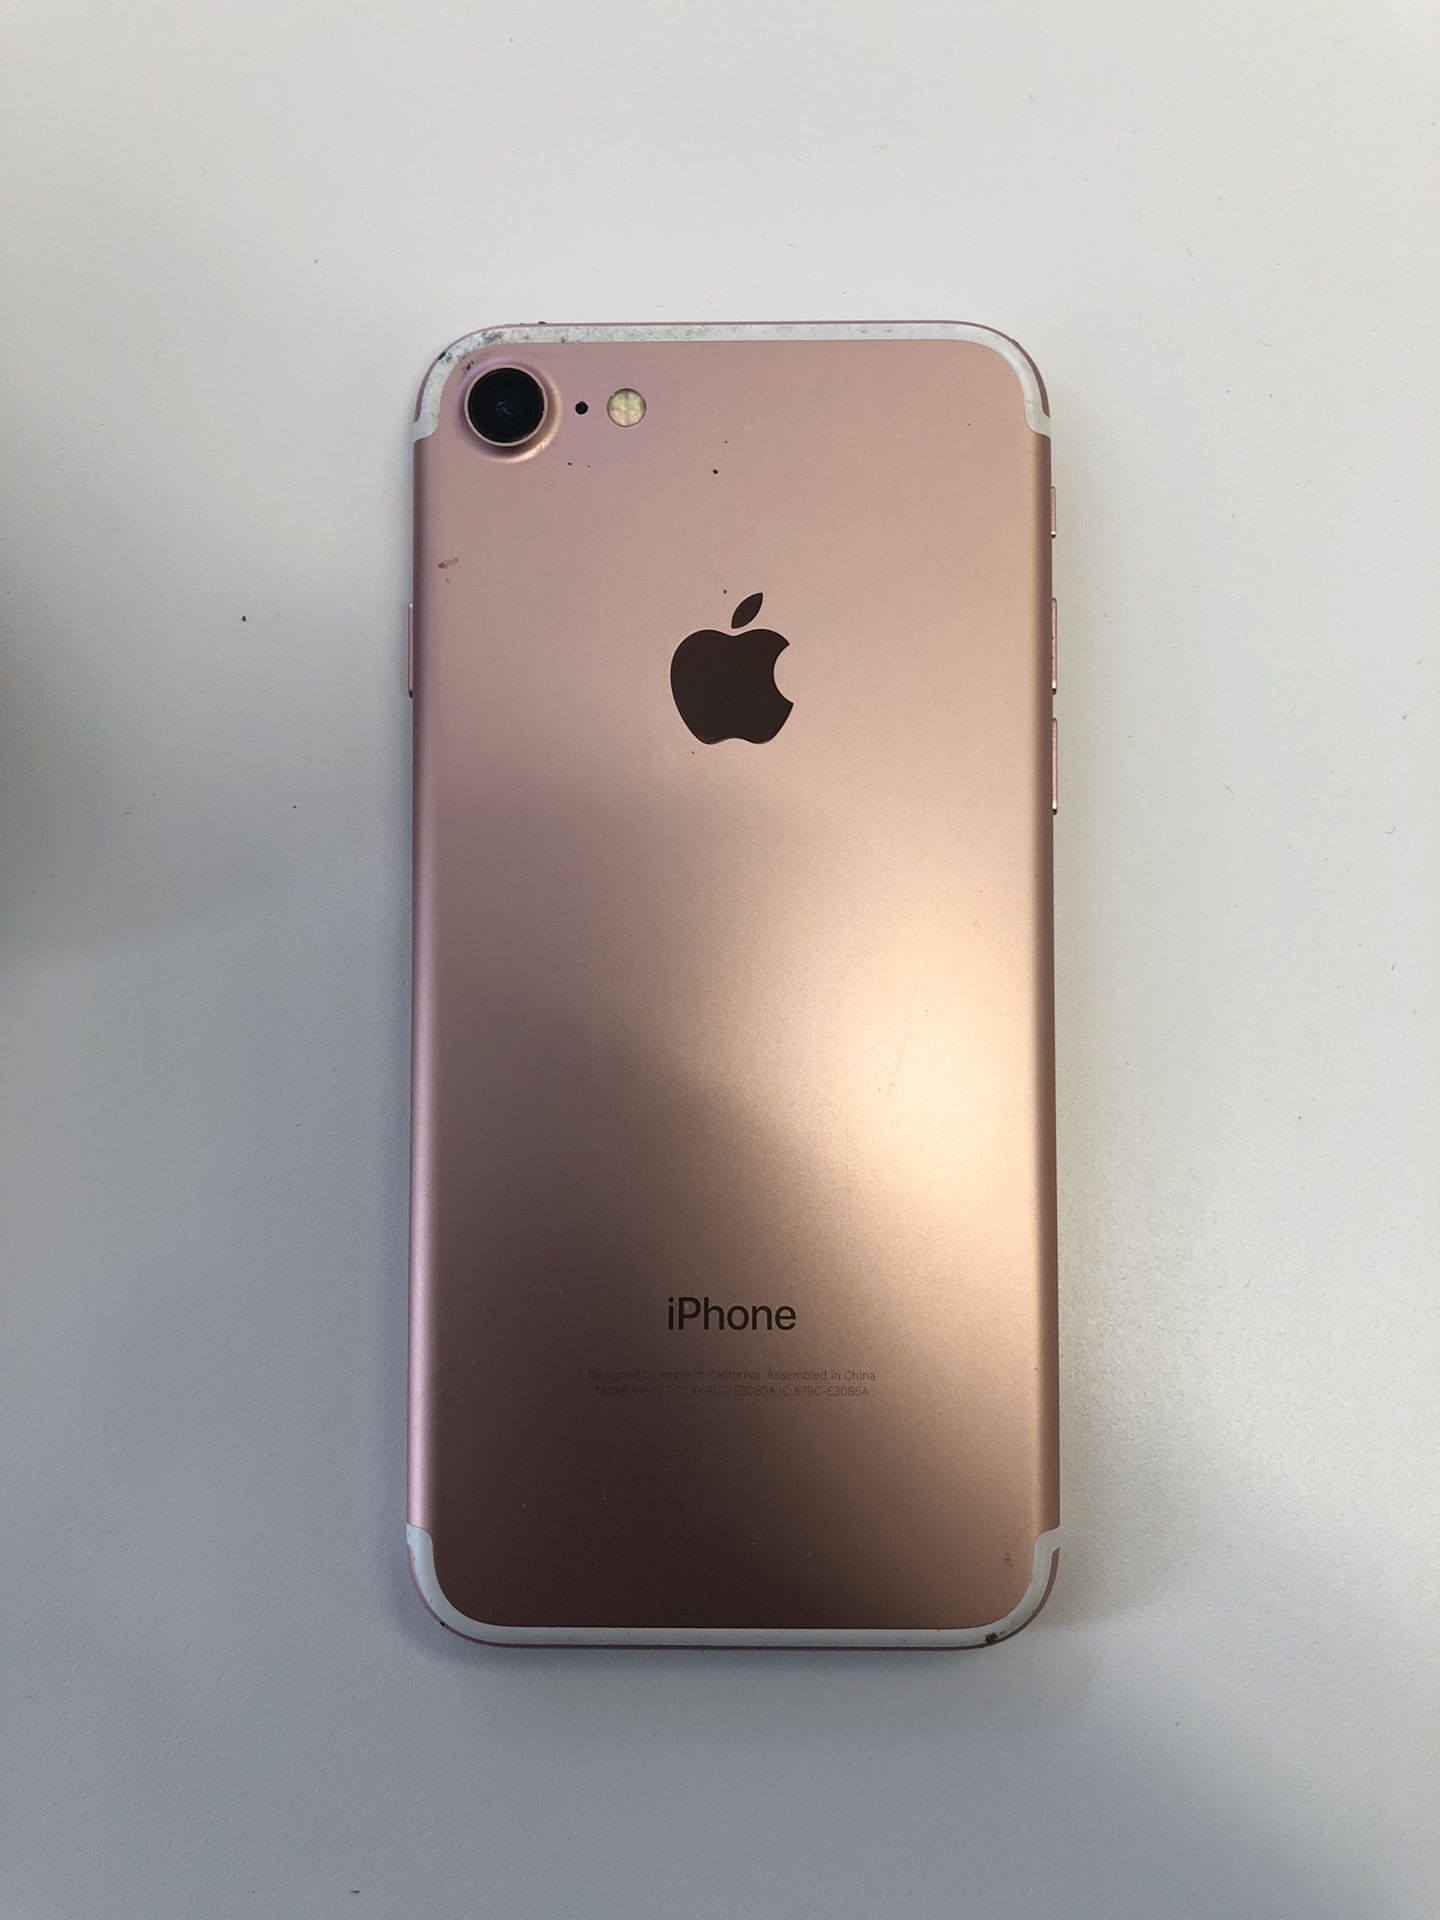 iPhone 7 128gb rose gold unlocked (originally Verizon phone)